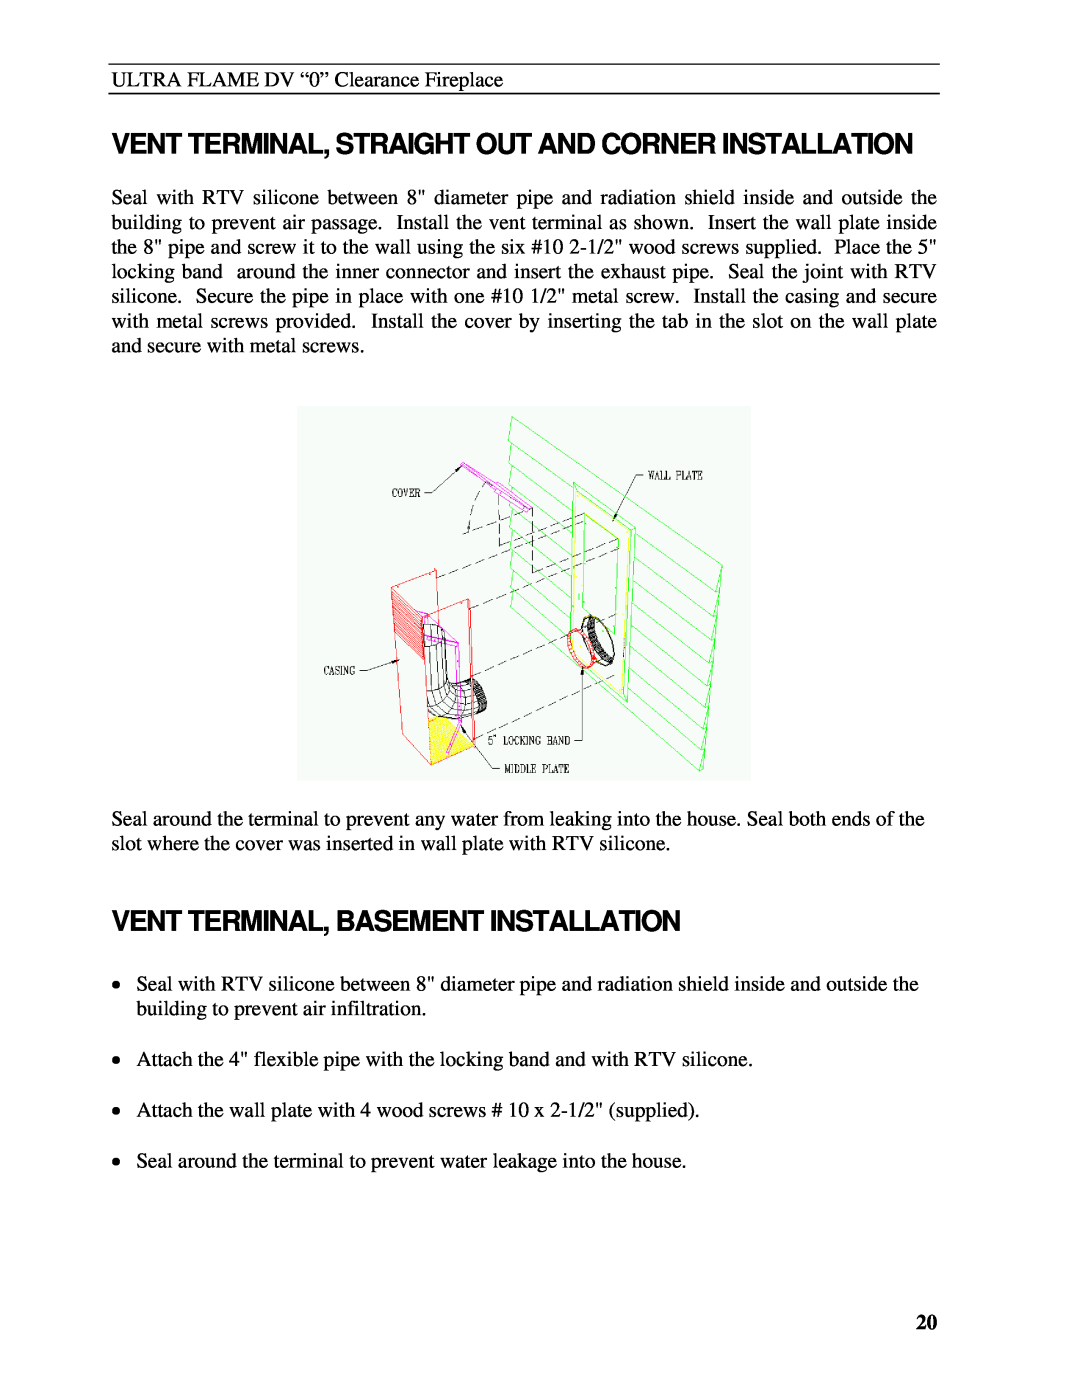 Drolet DG05437/DG05447 manual Vent Terminal, Basement Installation 